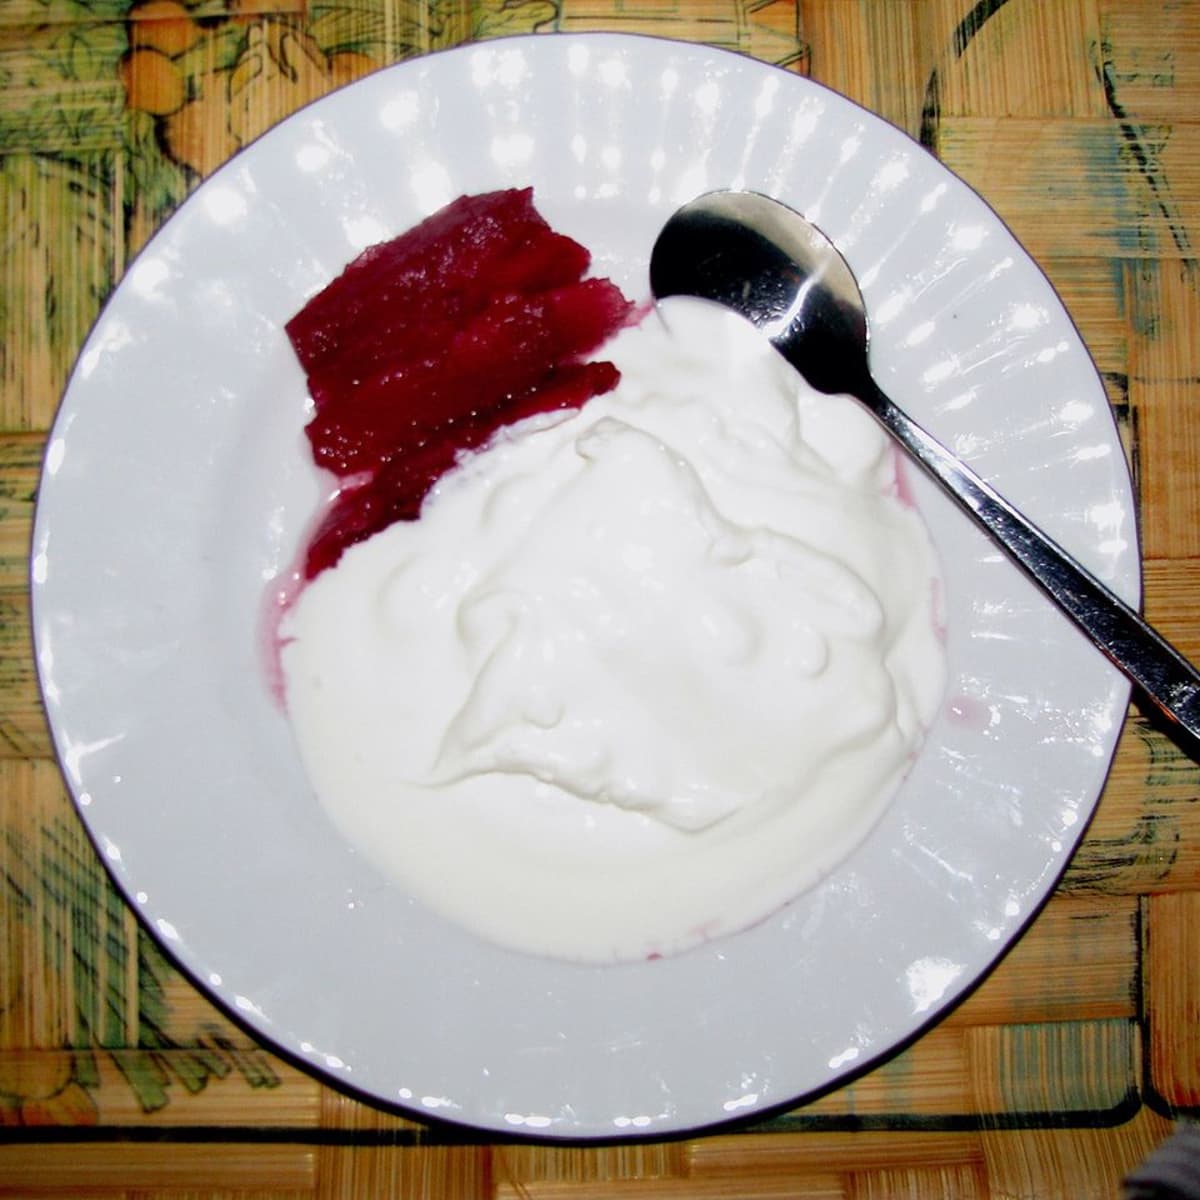 Glass jars enable yogurt's thick, creamy texture